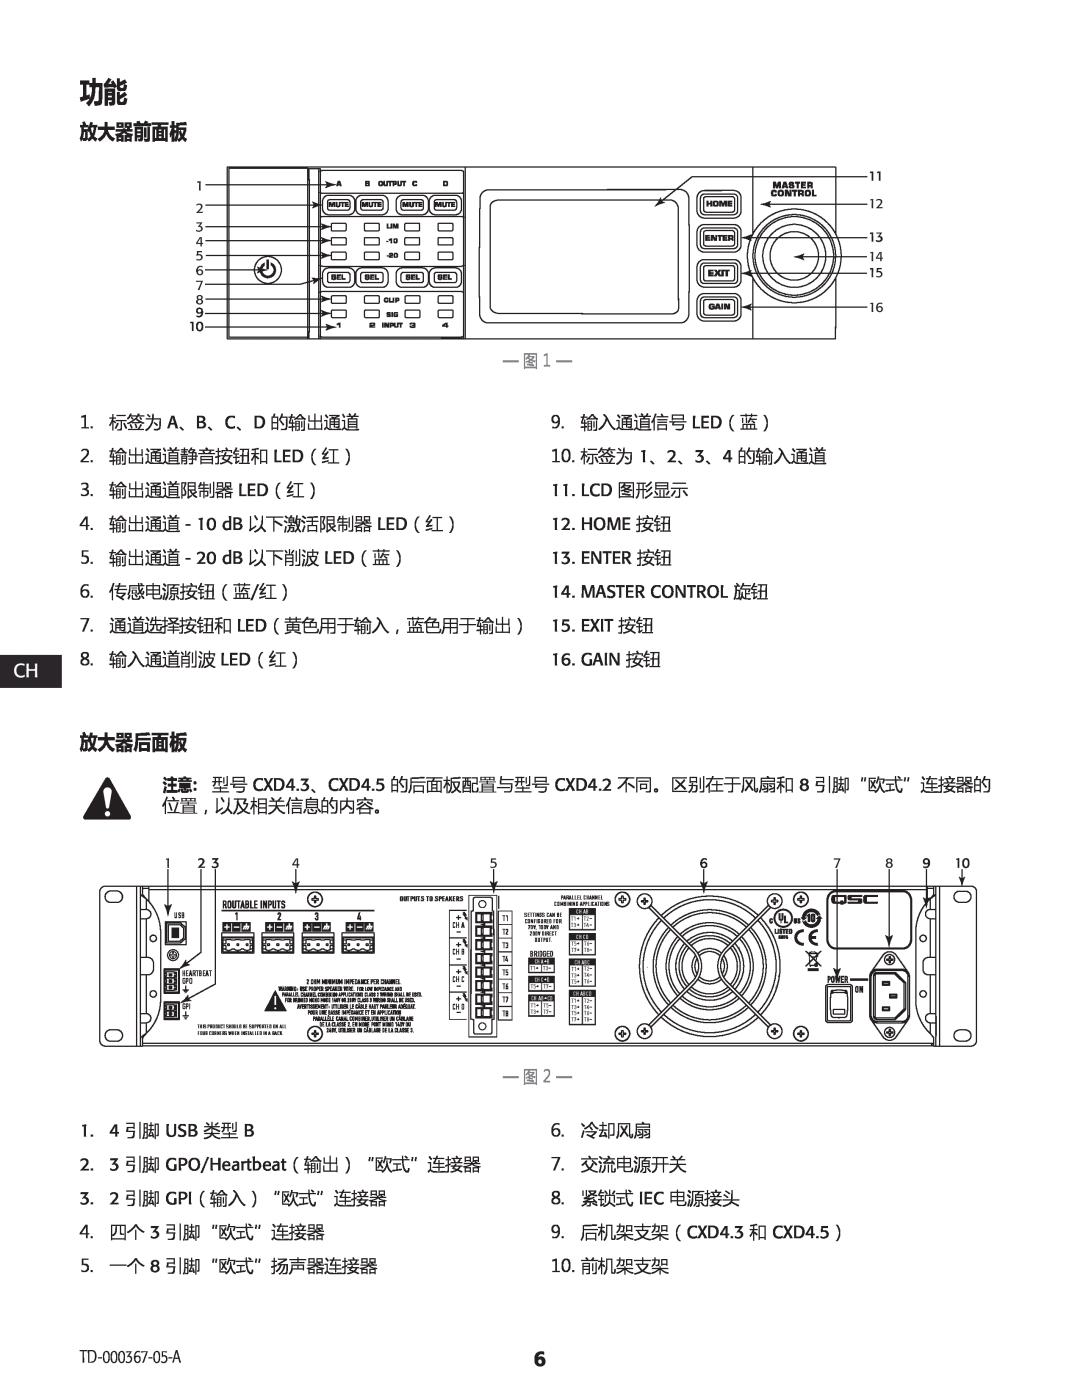 QSC Audio CXD4.2, CXD4.5, CXD4.3 manual 放大器前面板, 放大器后面板 